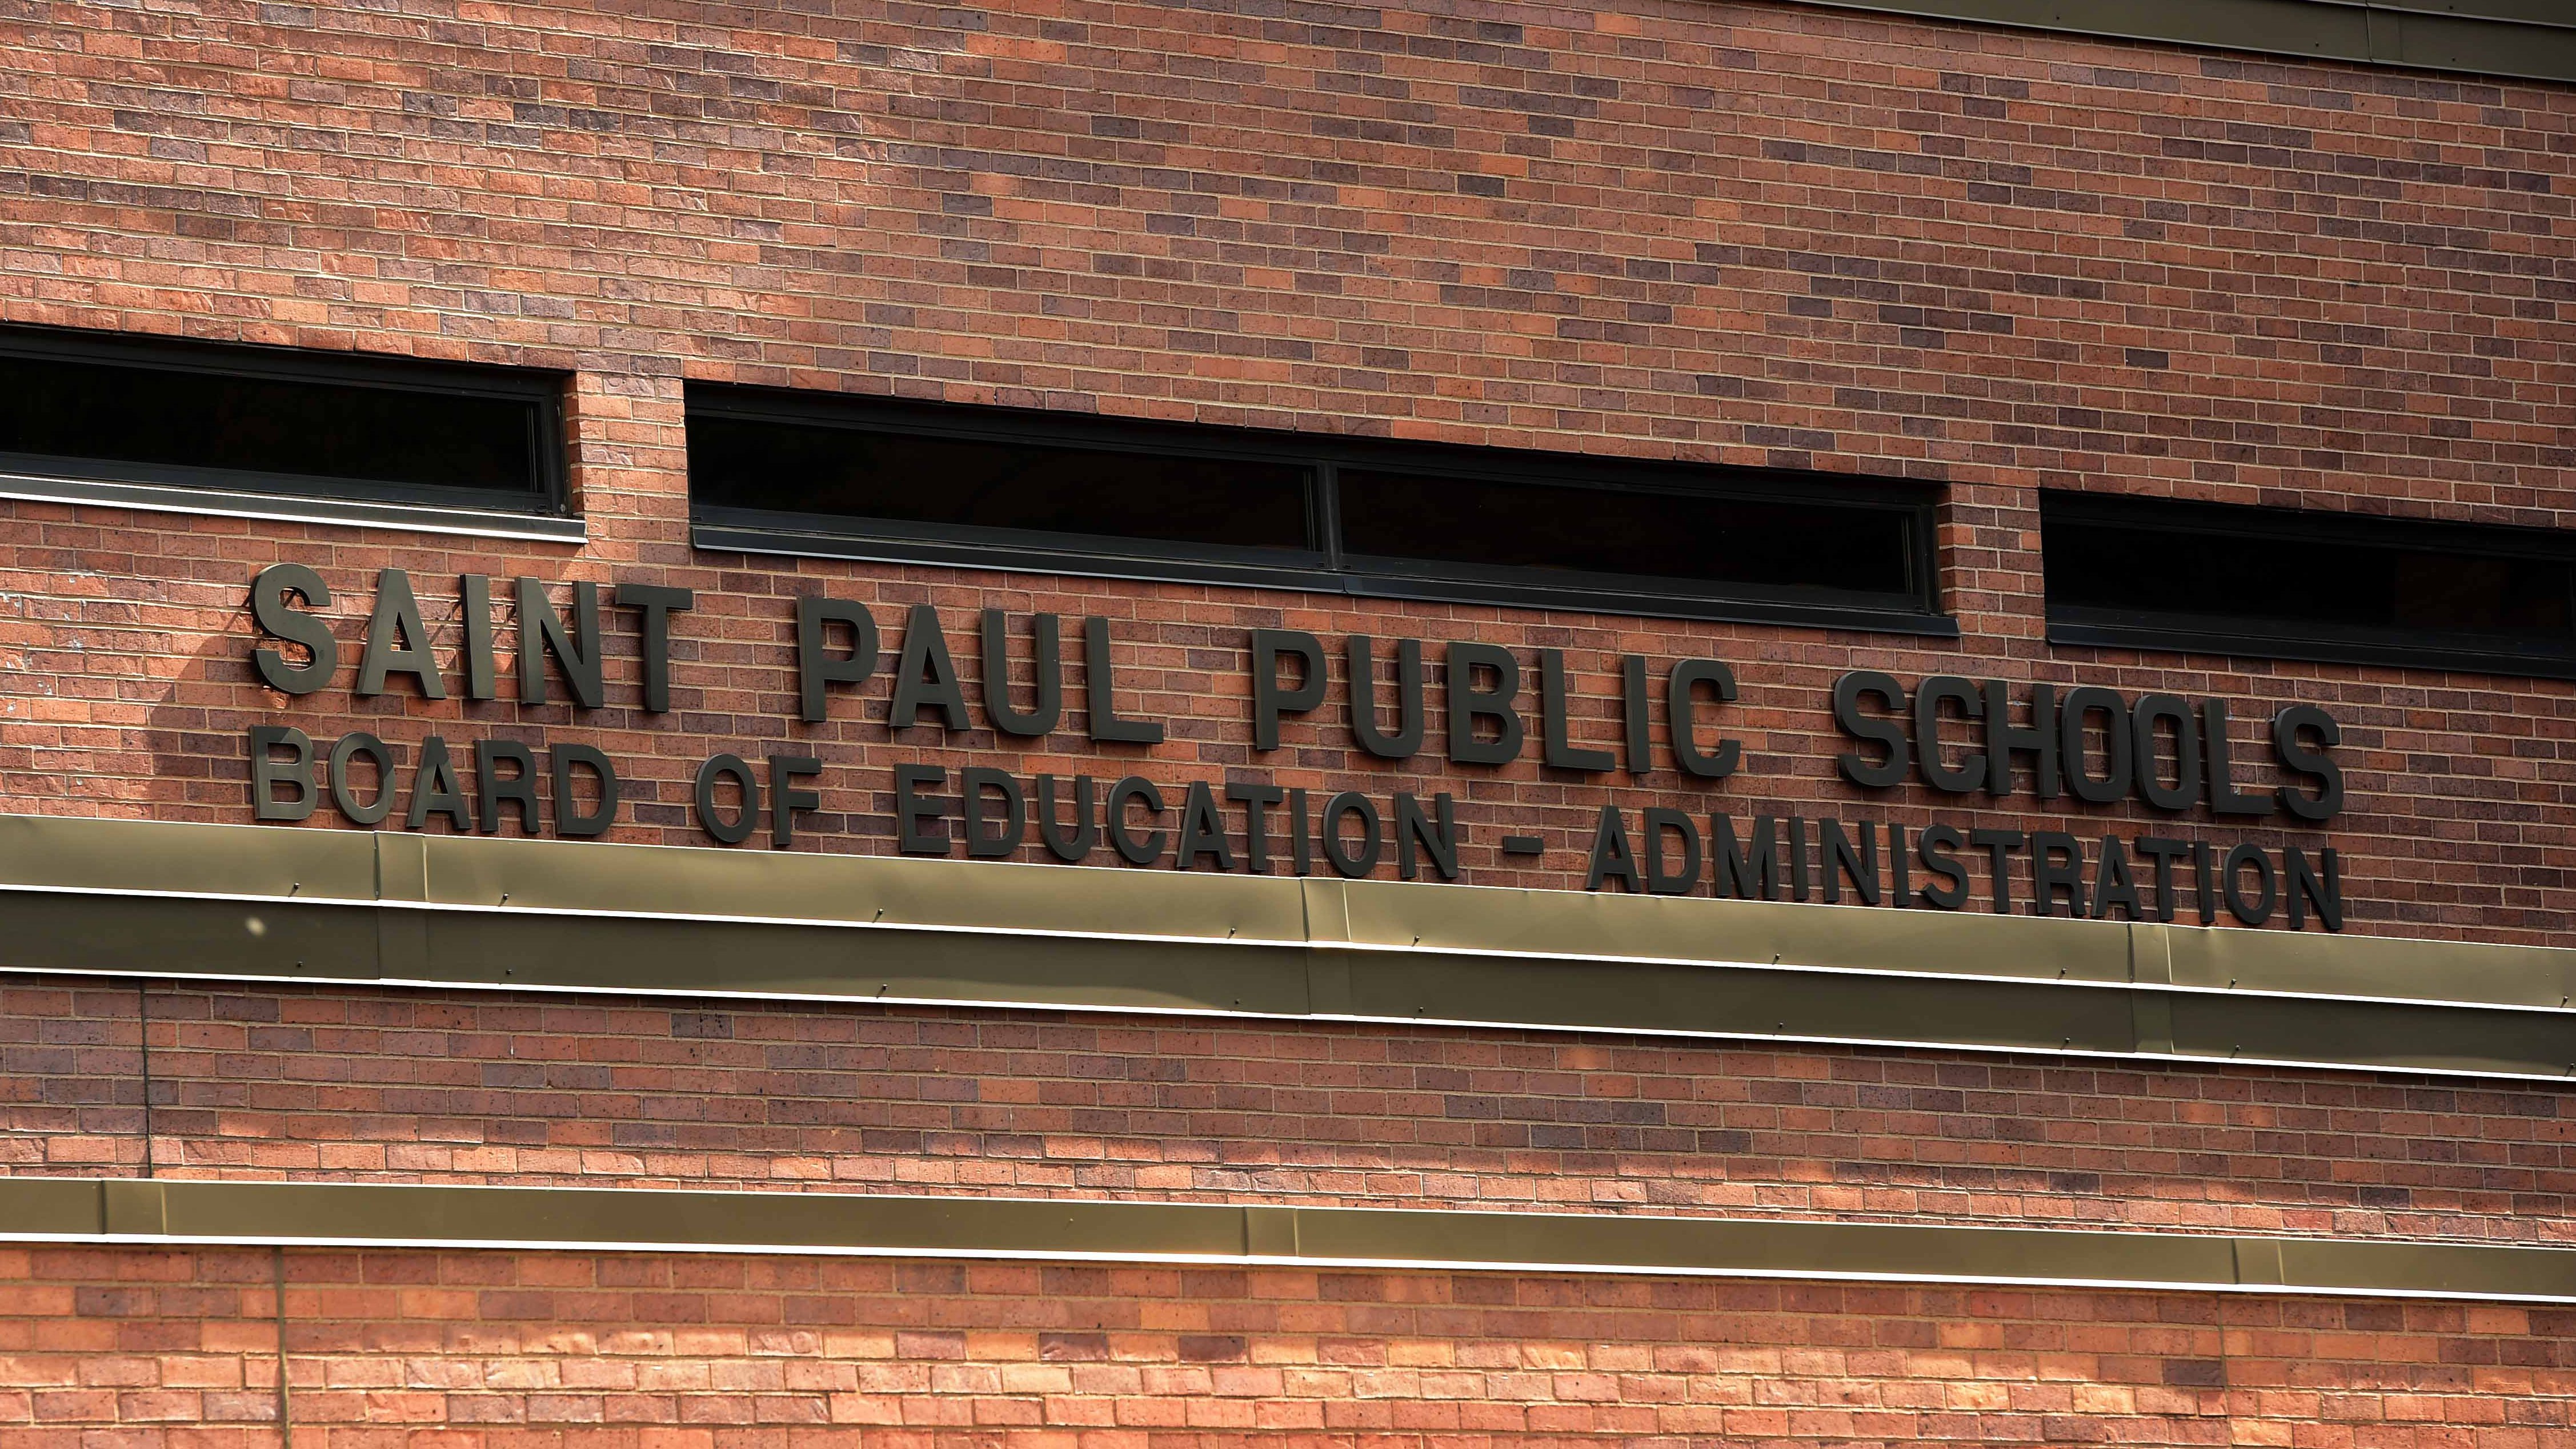 st paul public schools